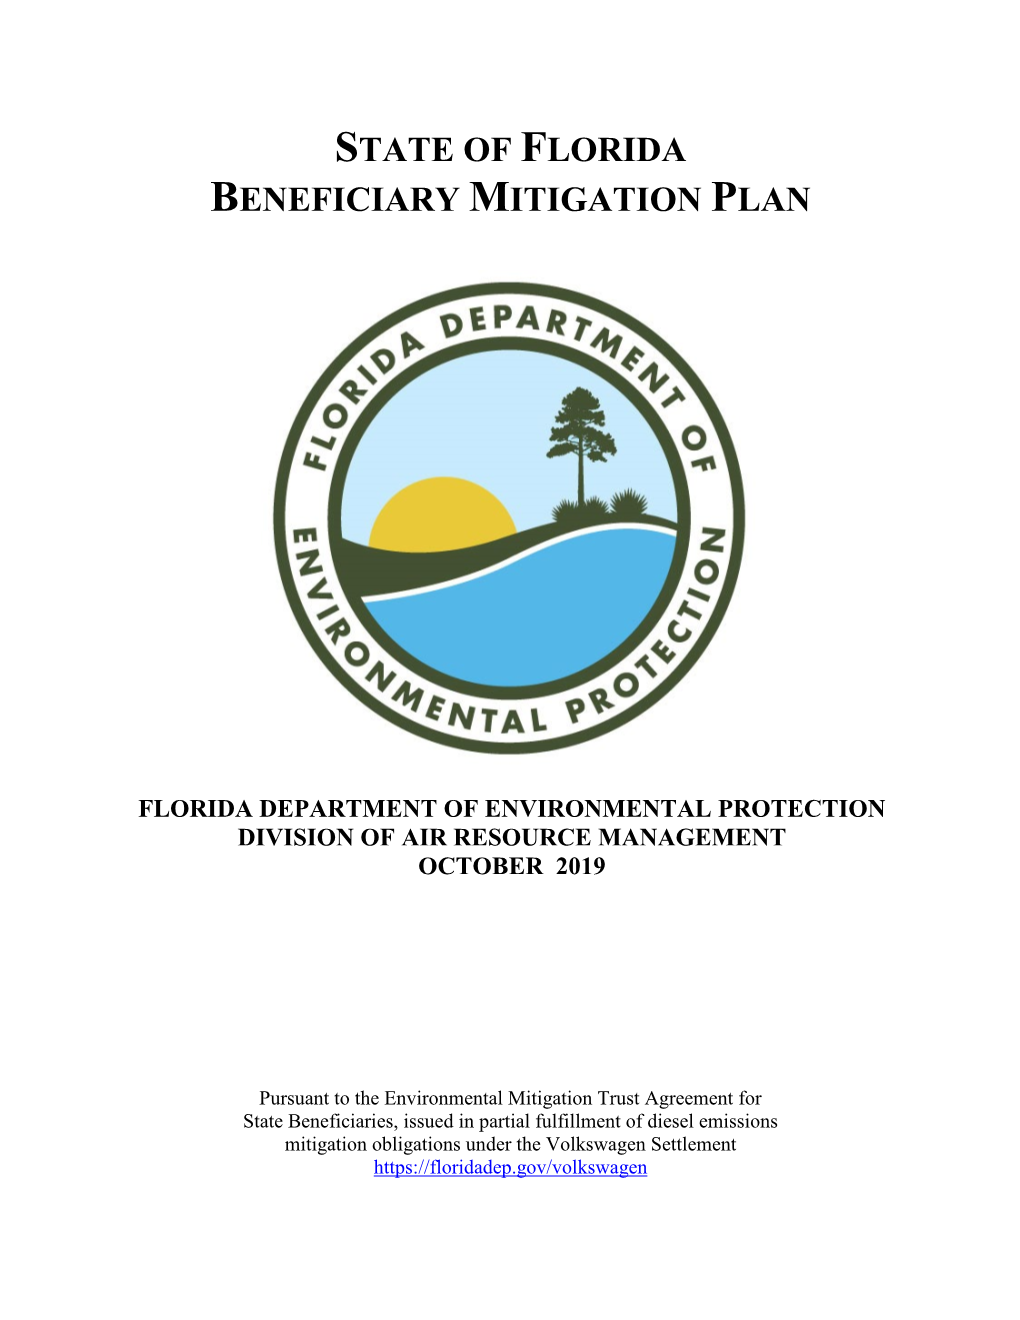 Beneficiary Mitigation Plan